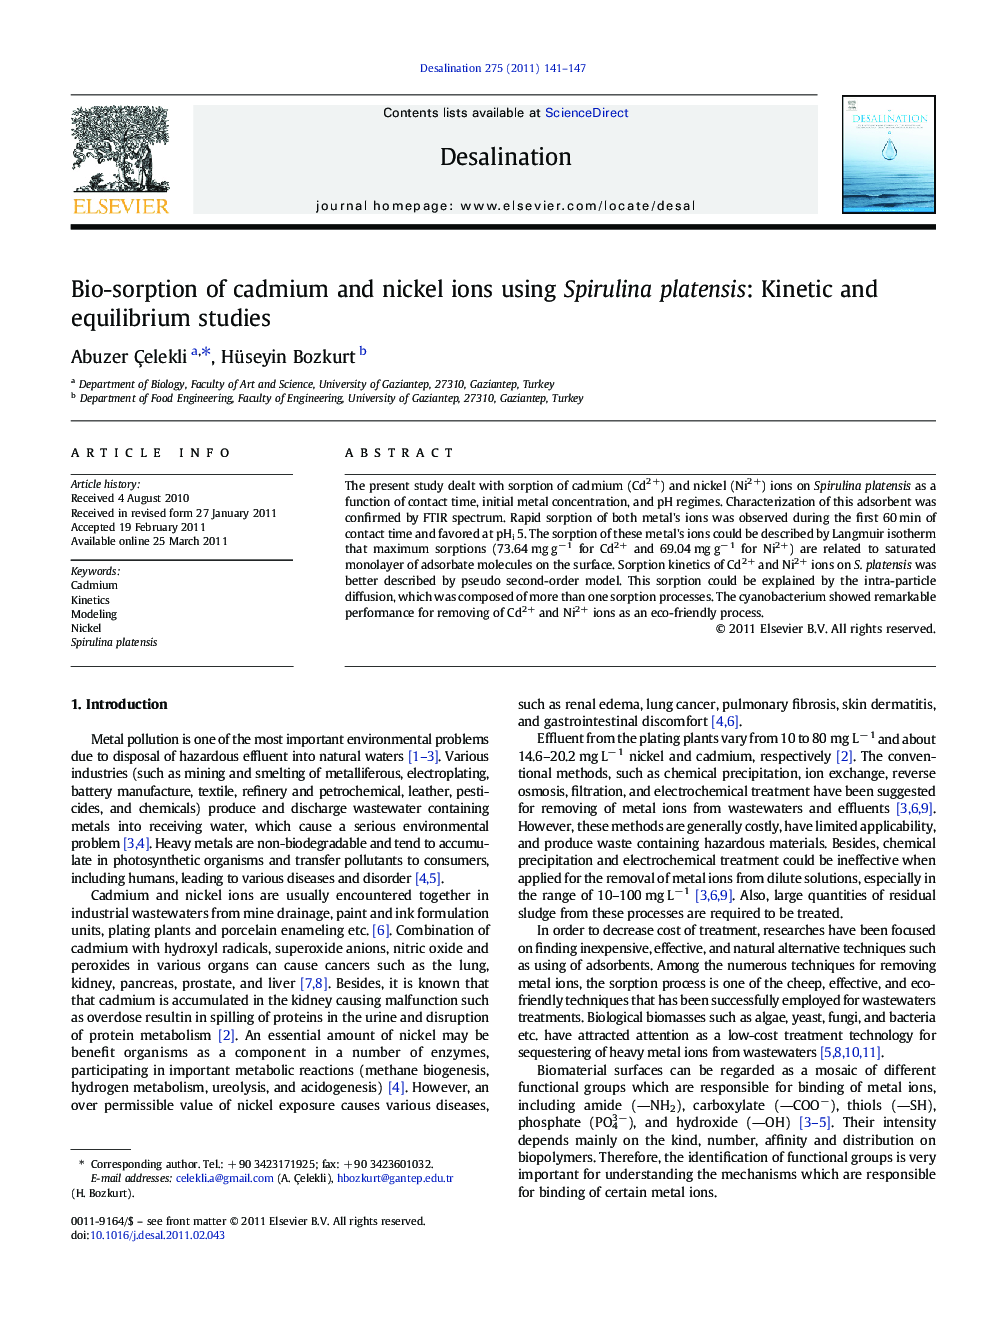 Bio-sorption of cadmium and nickel ions using Spirulina platensis: Kinetic and equilibrium studies